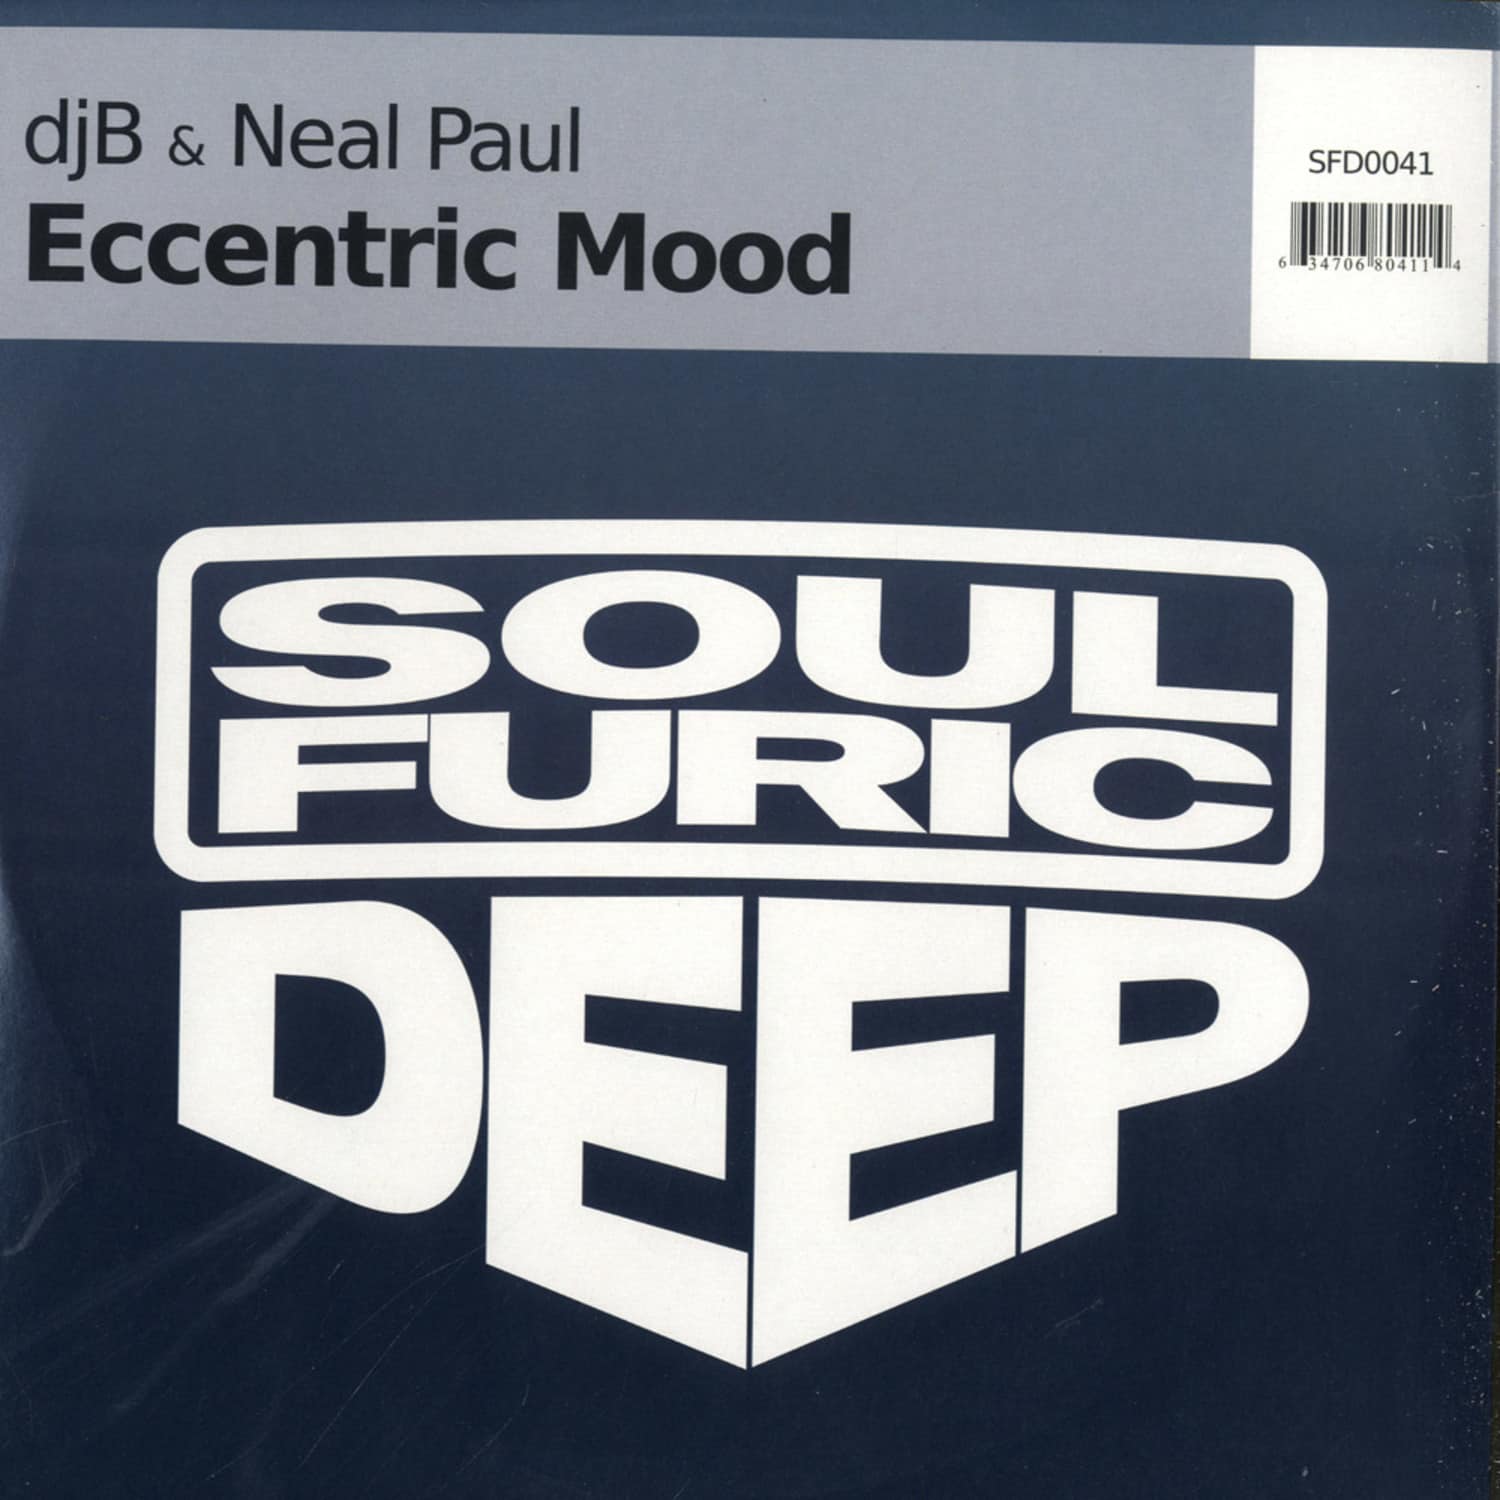 DJ B And Neal Paul - ECCENTRIC MOOD